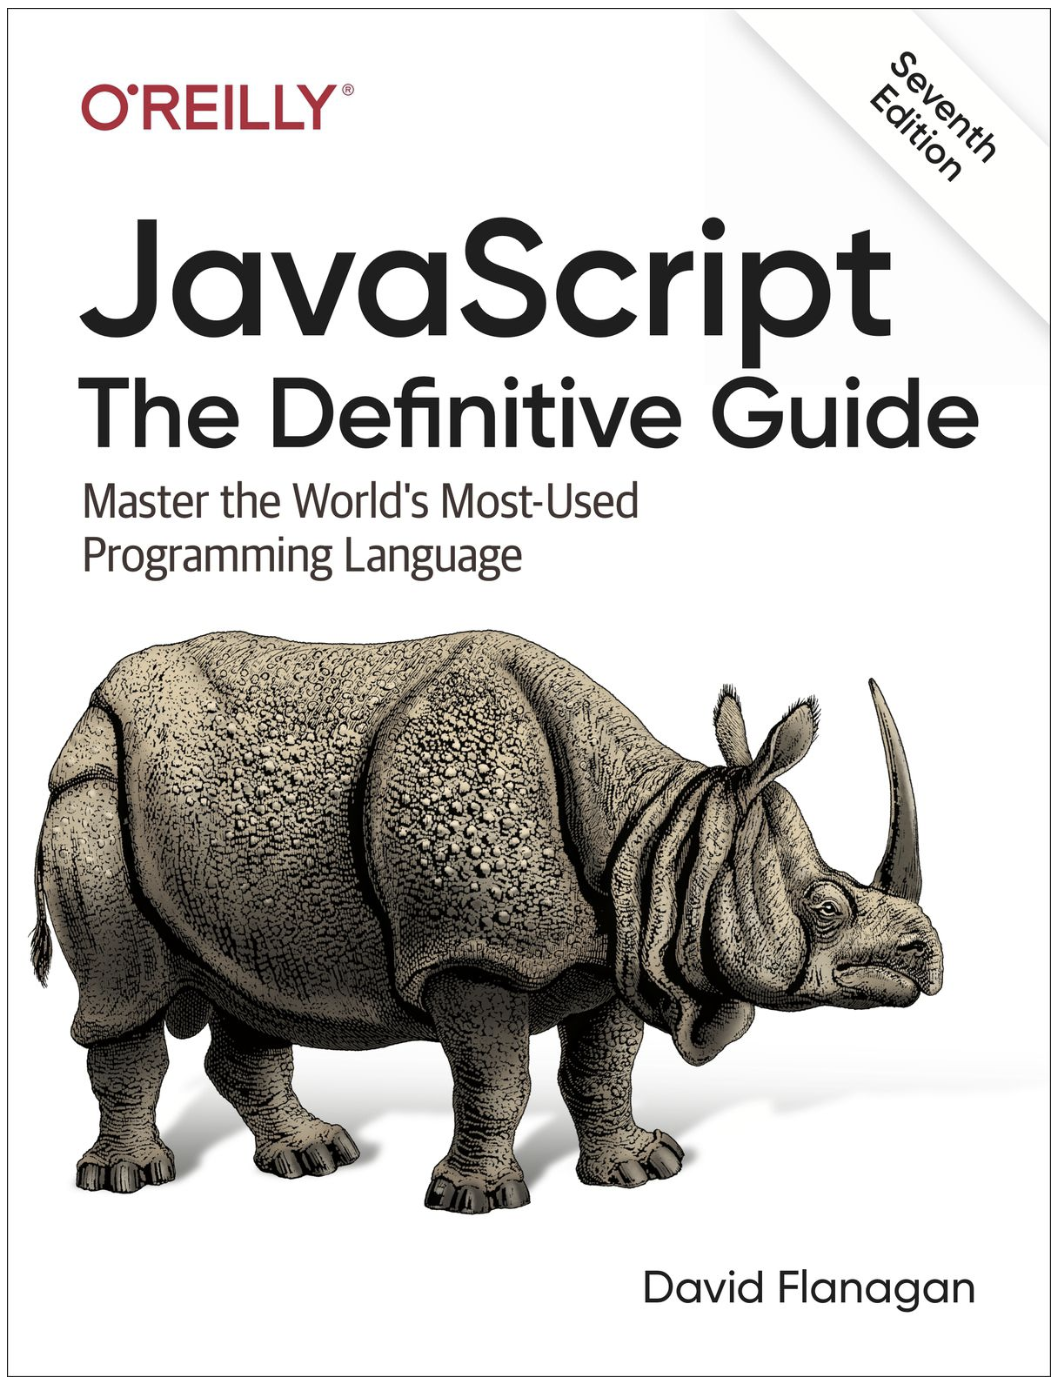 20 Best JavaScript Books for Web Developers in 2023